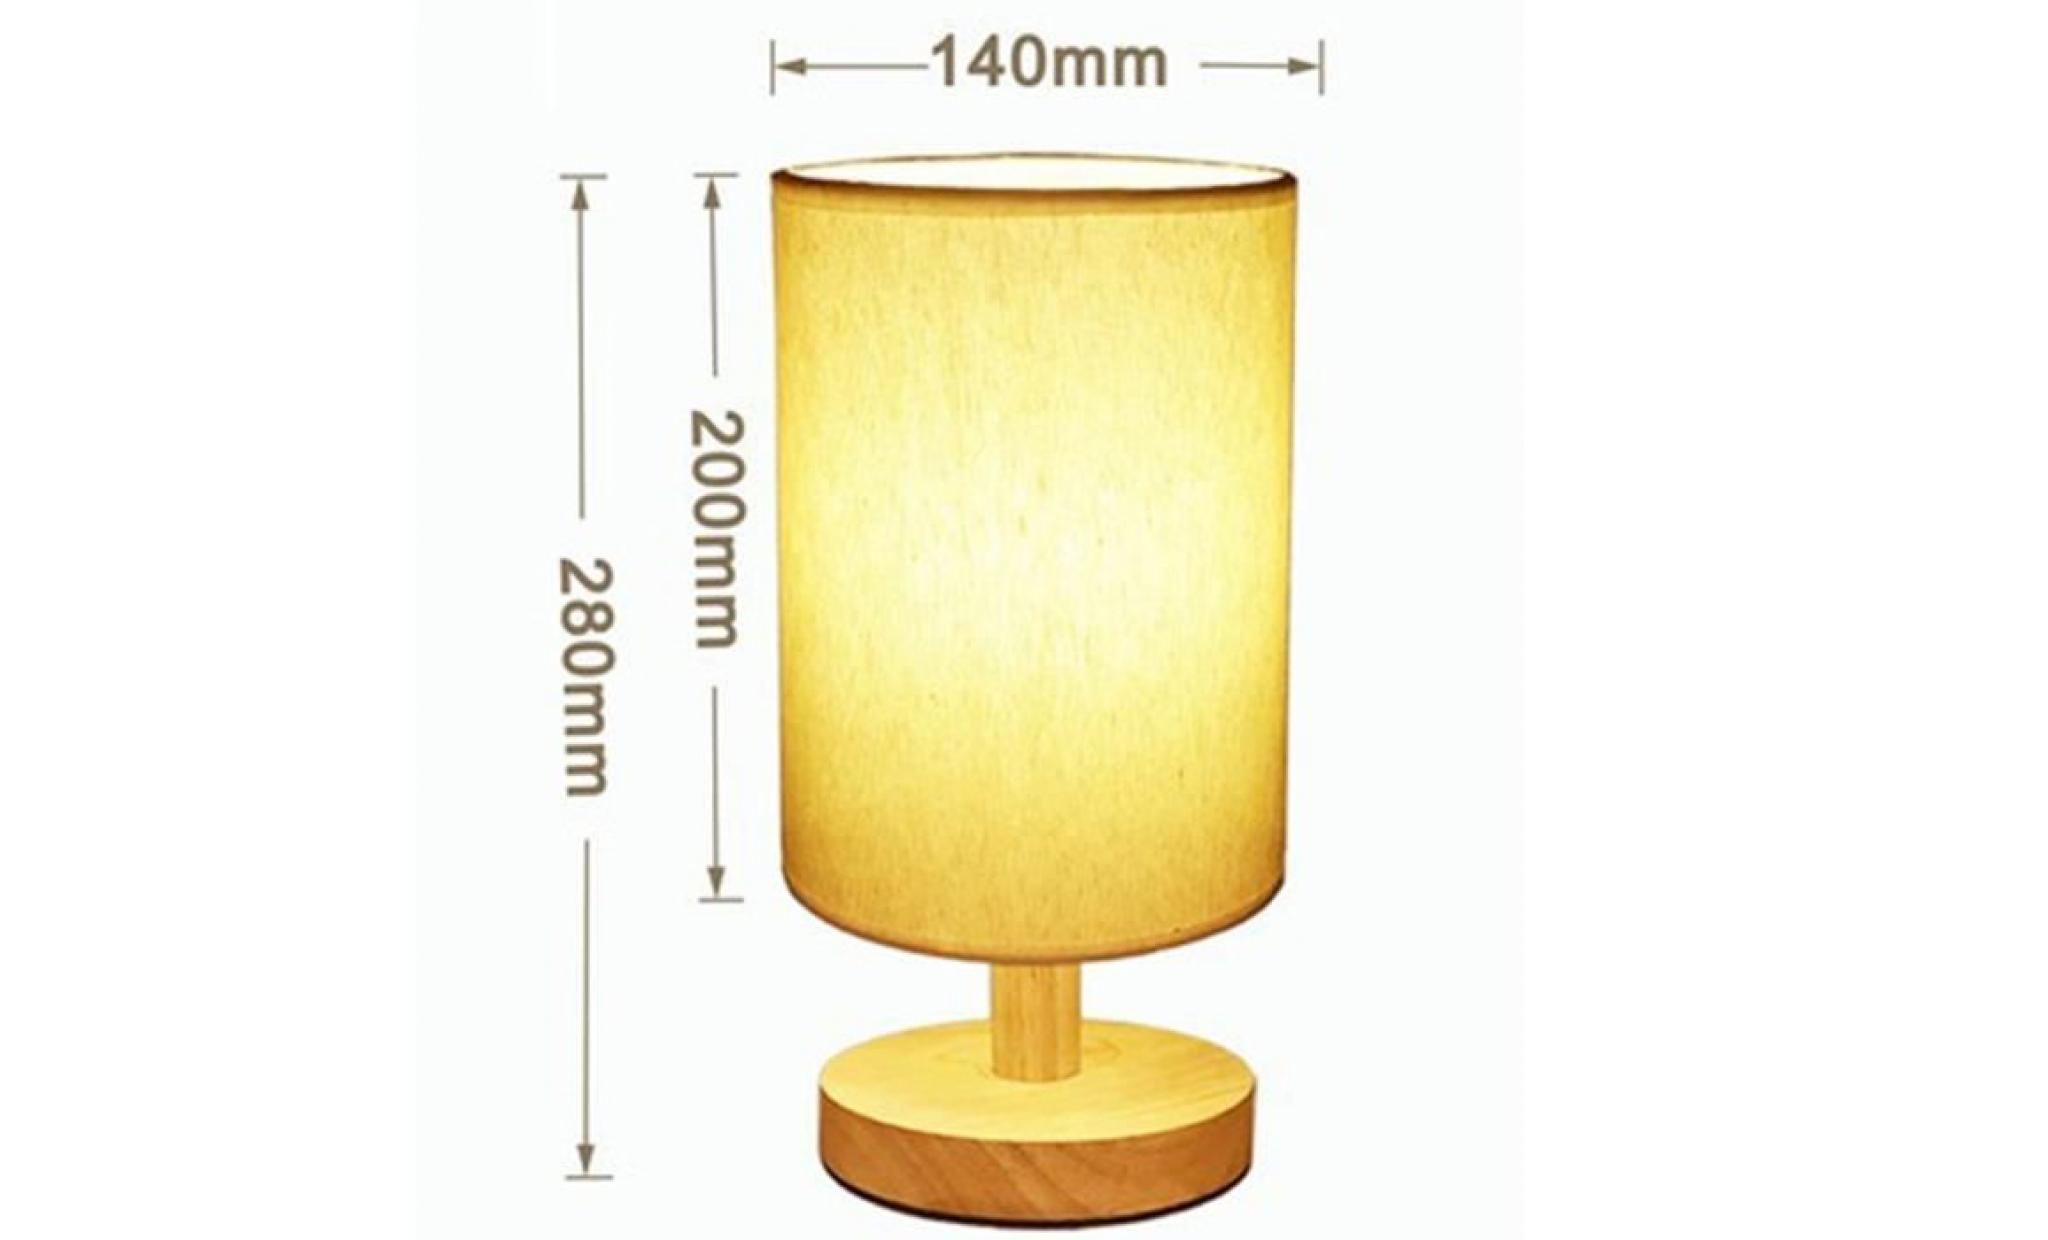 table de chevet lampe minimaliste en bois massif table lampe de chevet lampe de bureau simple lampe ronde bureau lampe de chevet pas cher